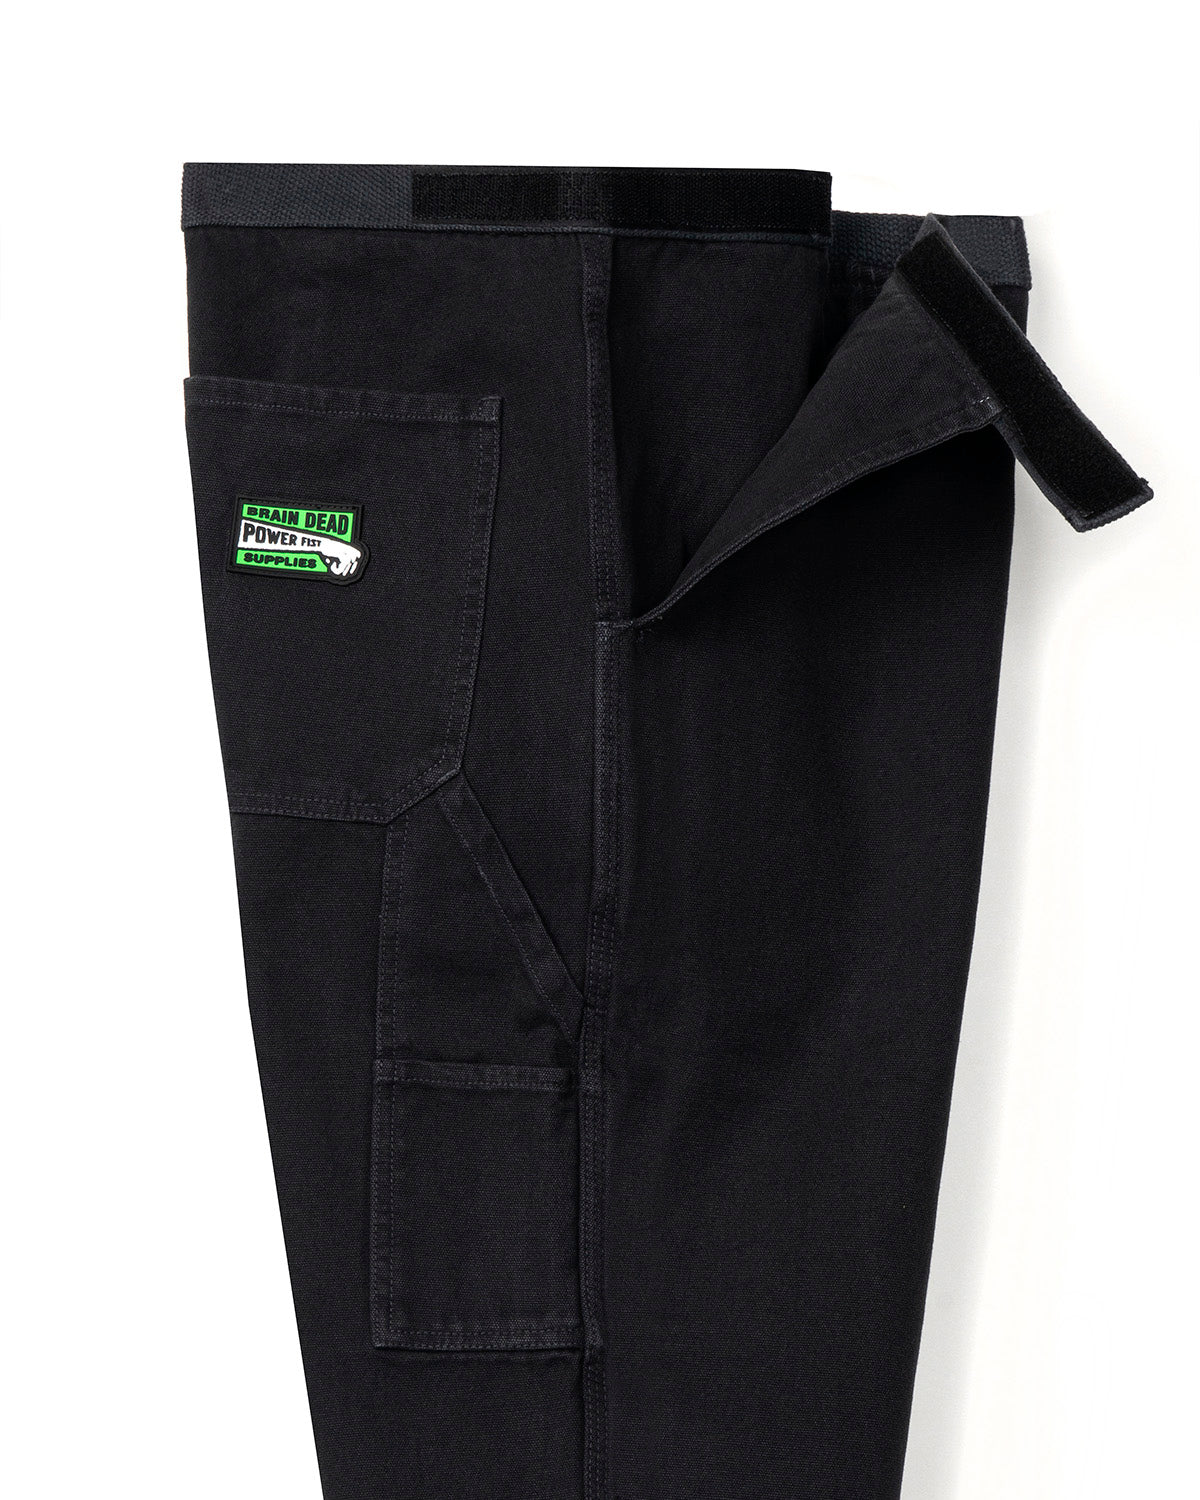 Washed Hard/Softwear Carpenter Pant - Black